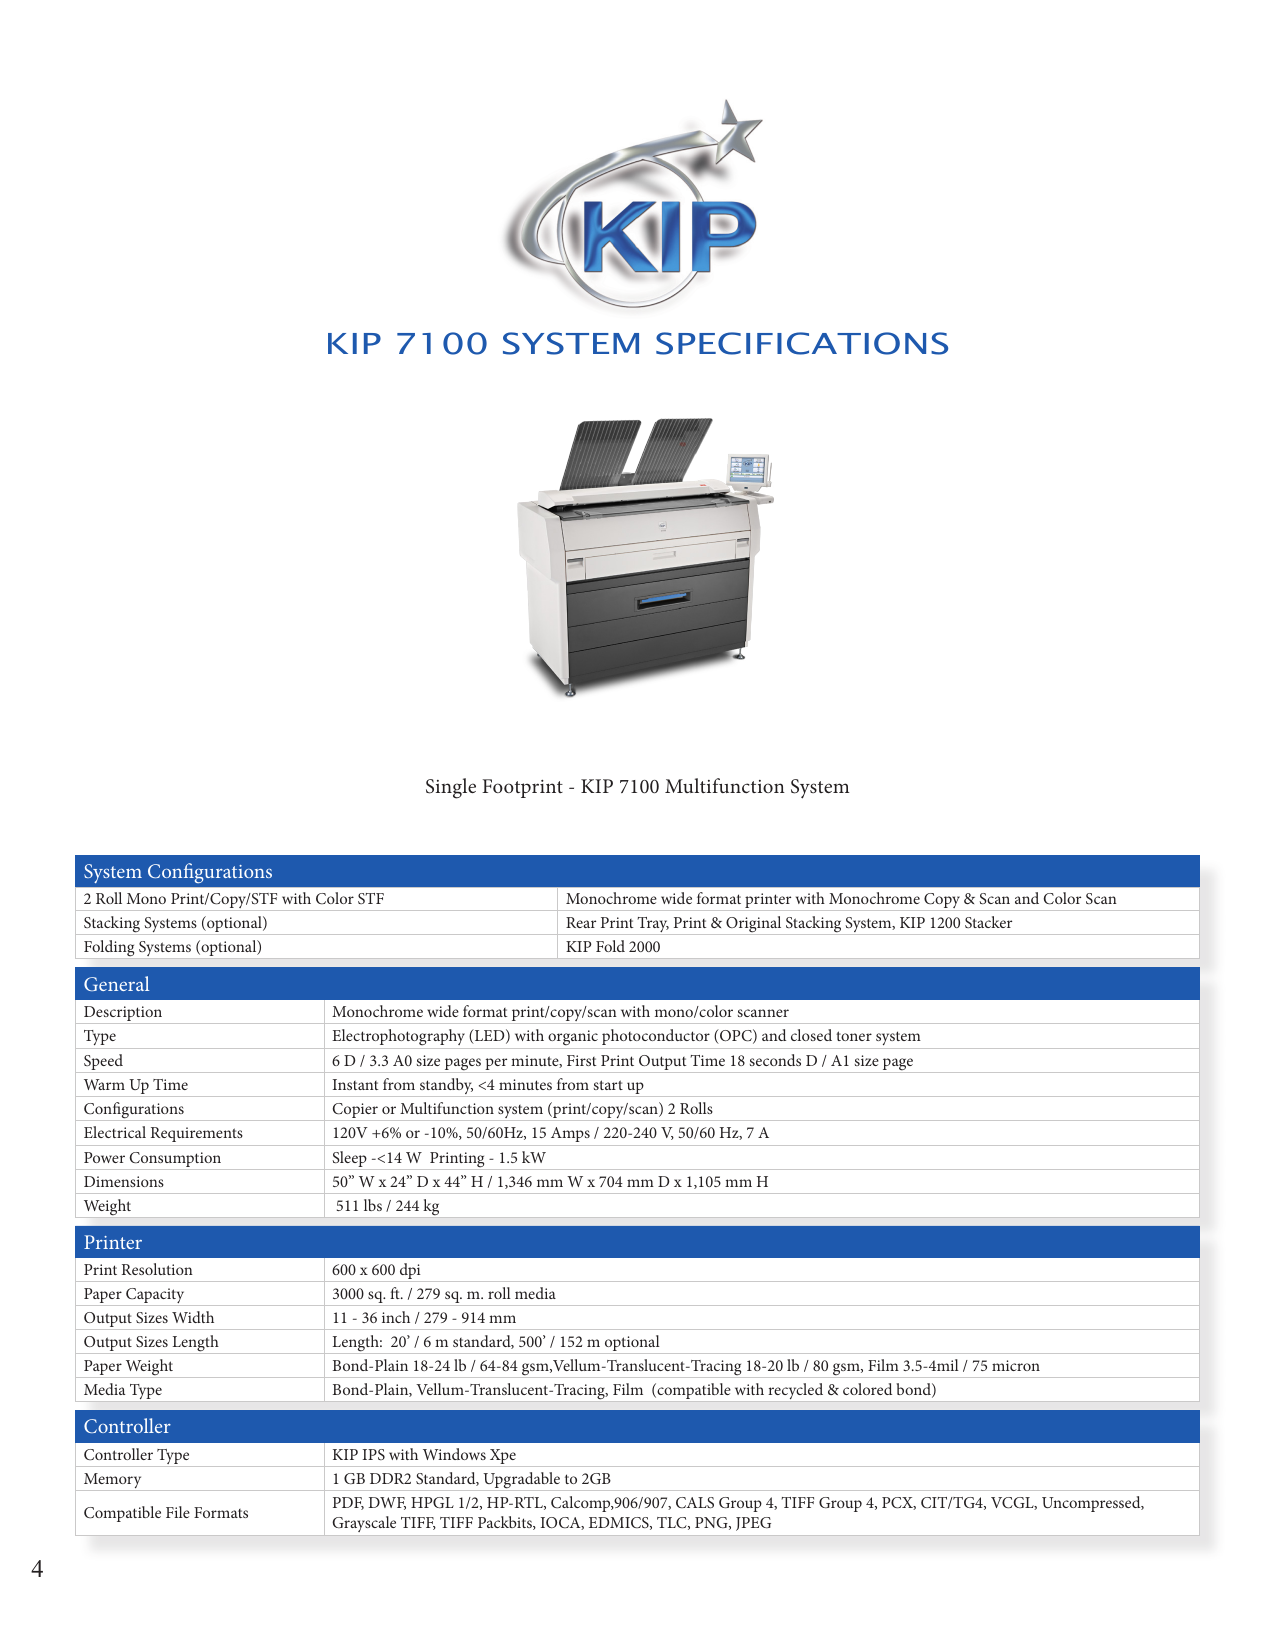 Kip 7100 System Specifications Manualzz